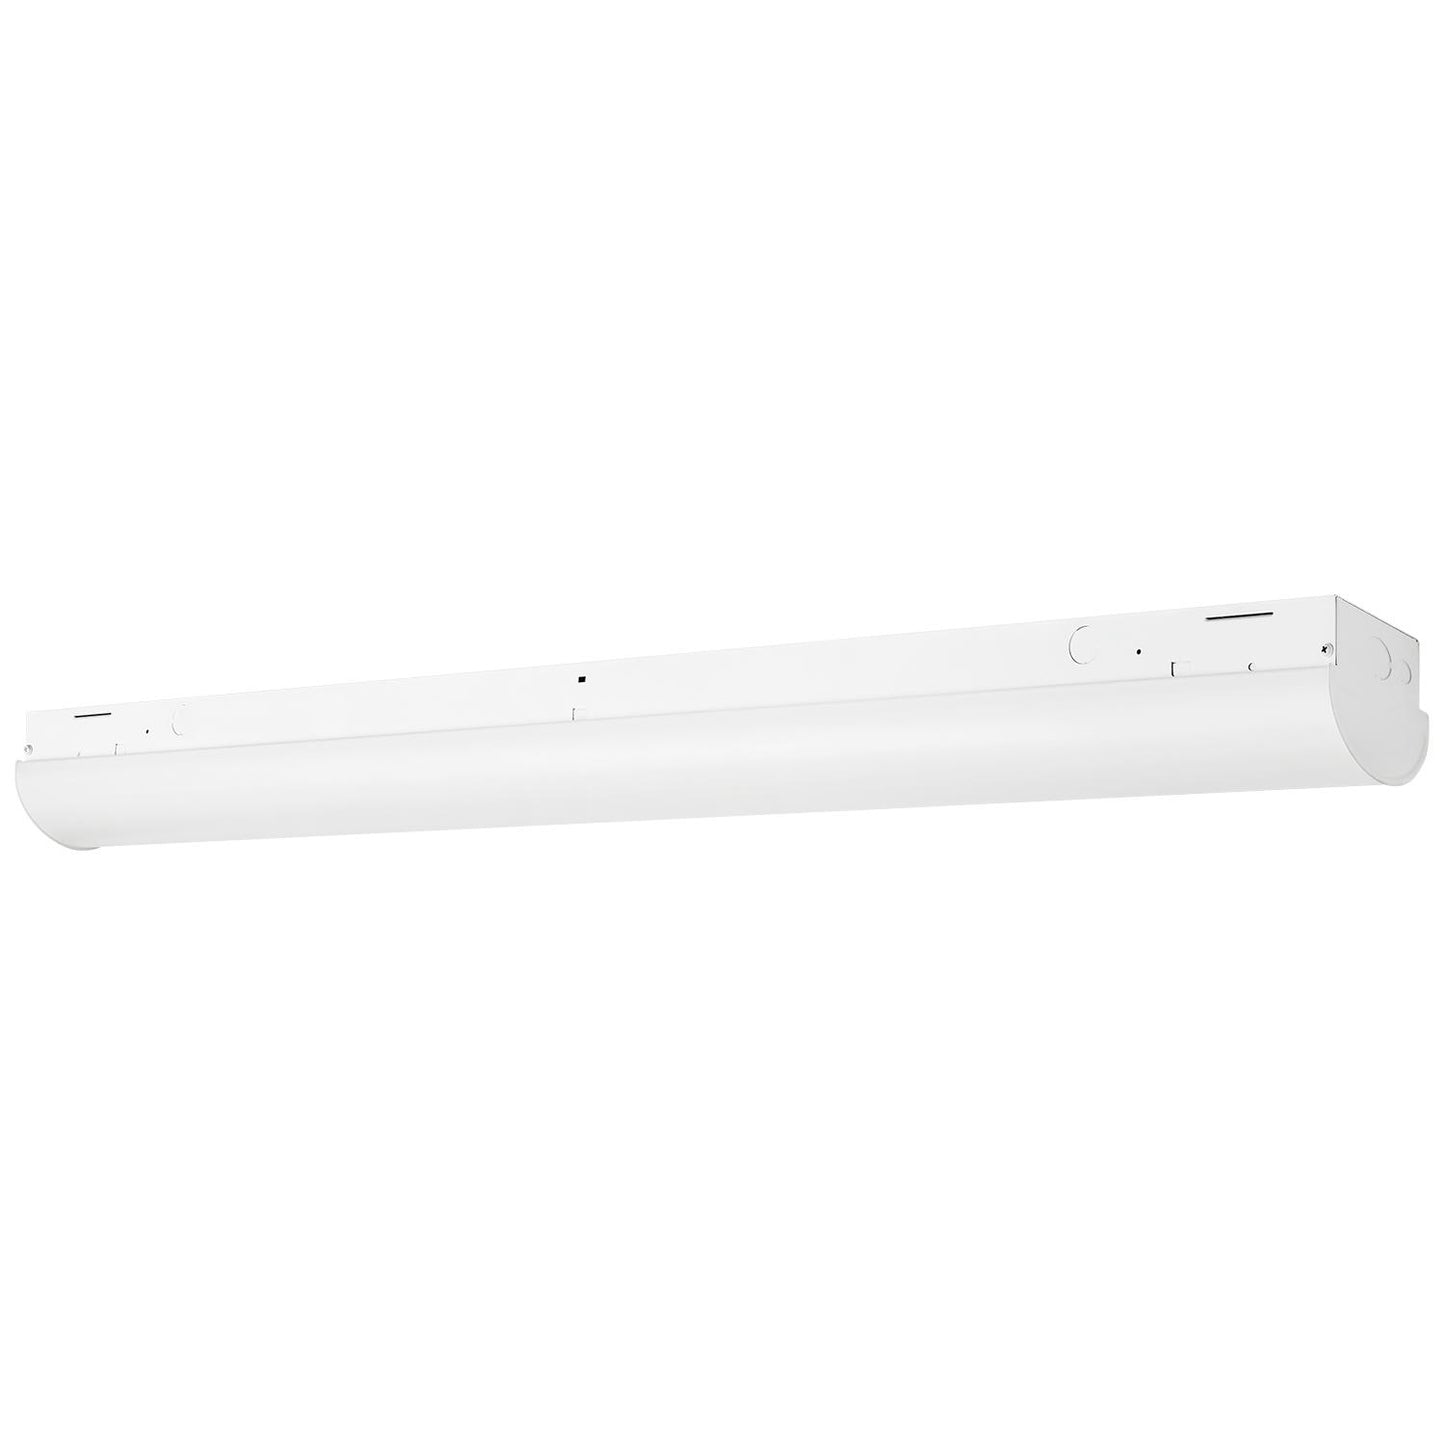 Sunlite 48" Linear LED Strip Fixture, 40 Watt, 3500K - Neutral White, White Finish, UL Listed, DLC Listed, Dimmable